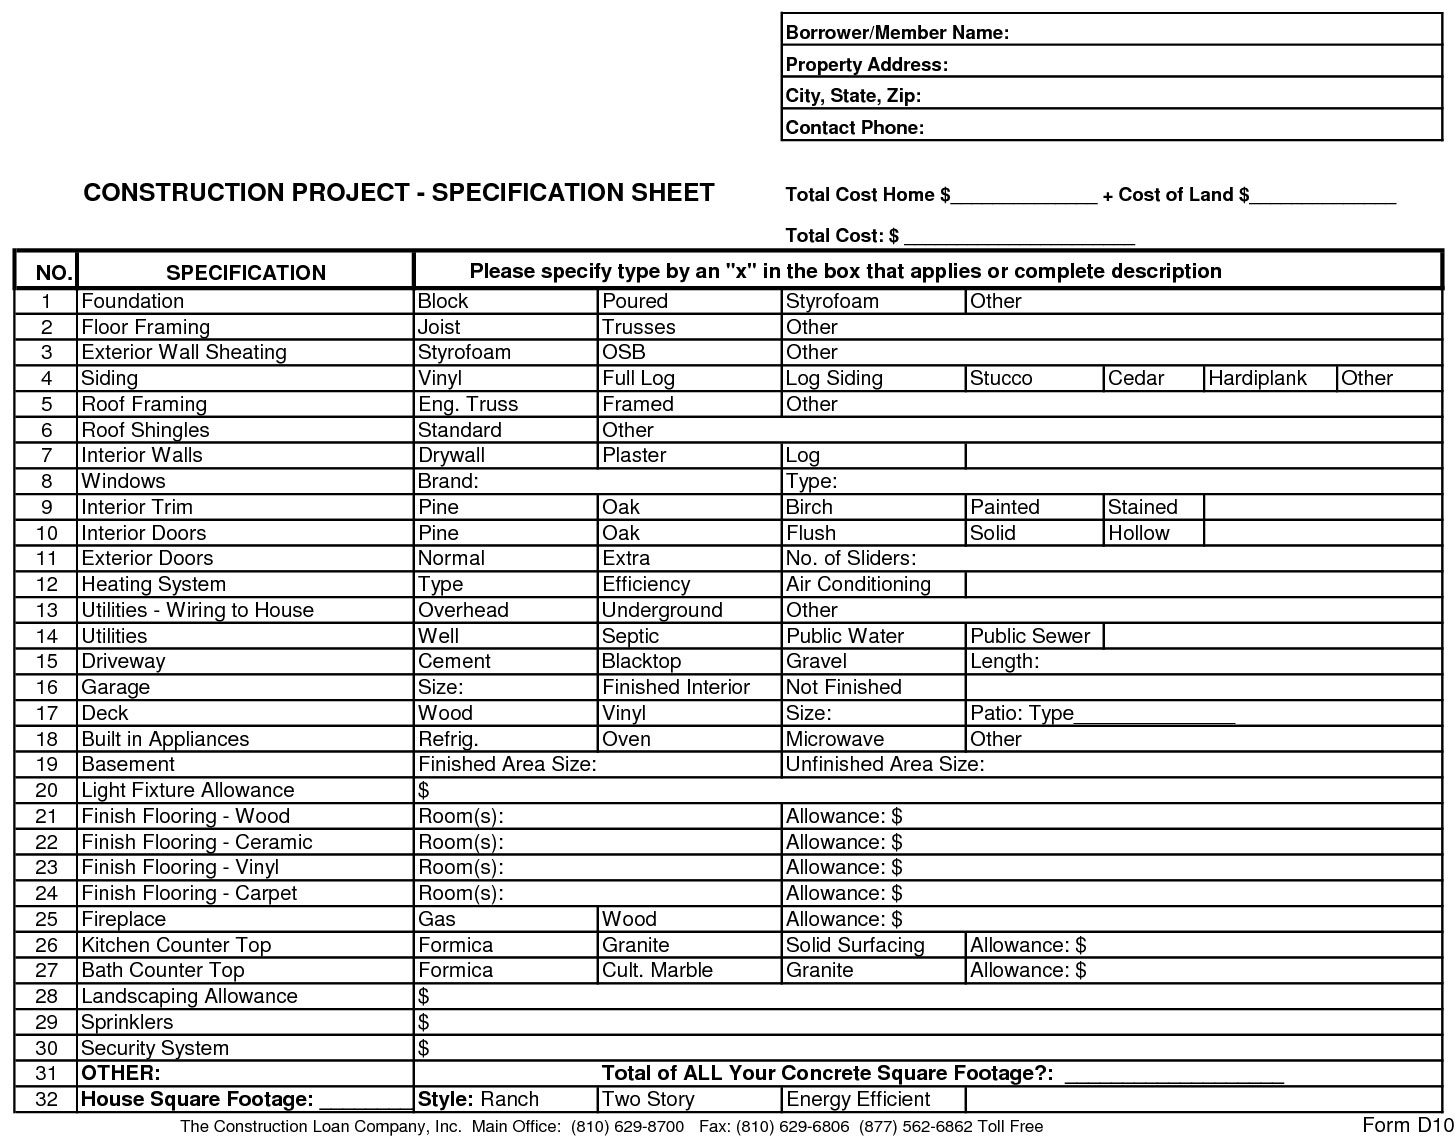 contractor checklist template - Sablon With Regard To Home Construction Checklist Template Throughout Home Construction Checklist Template